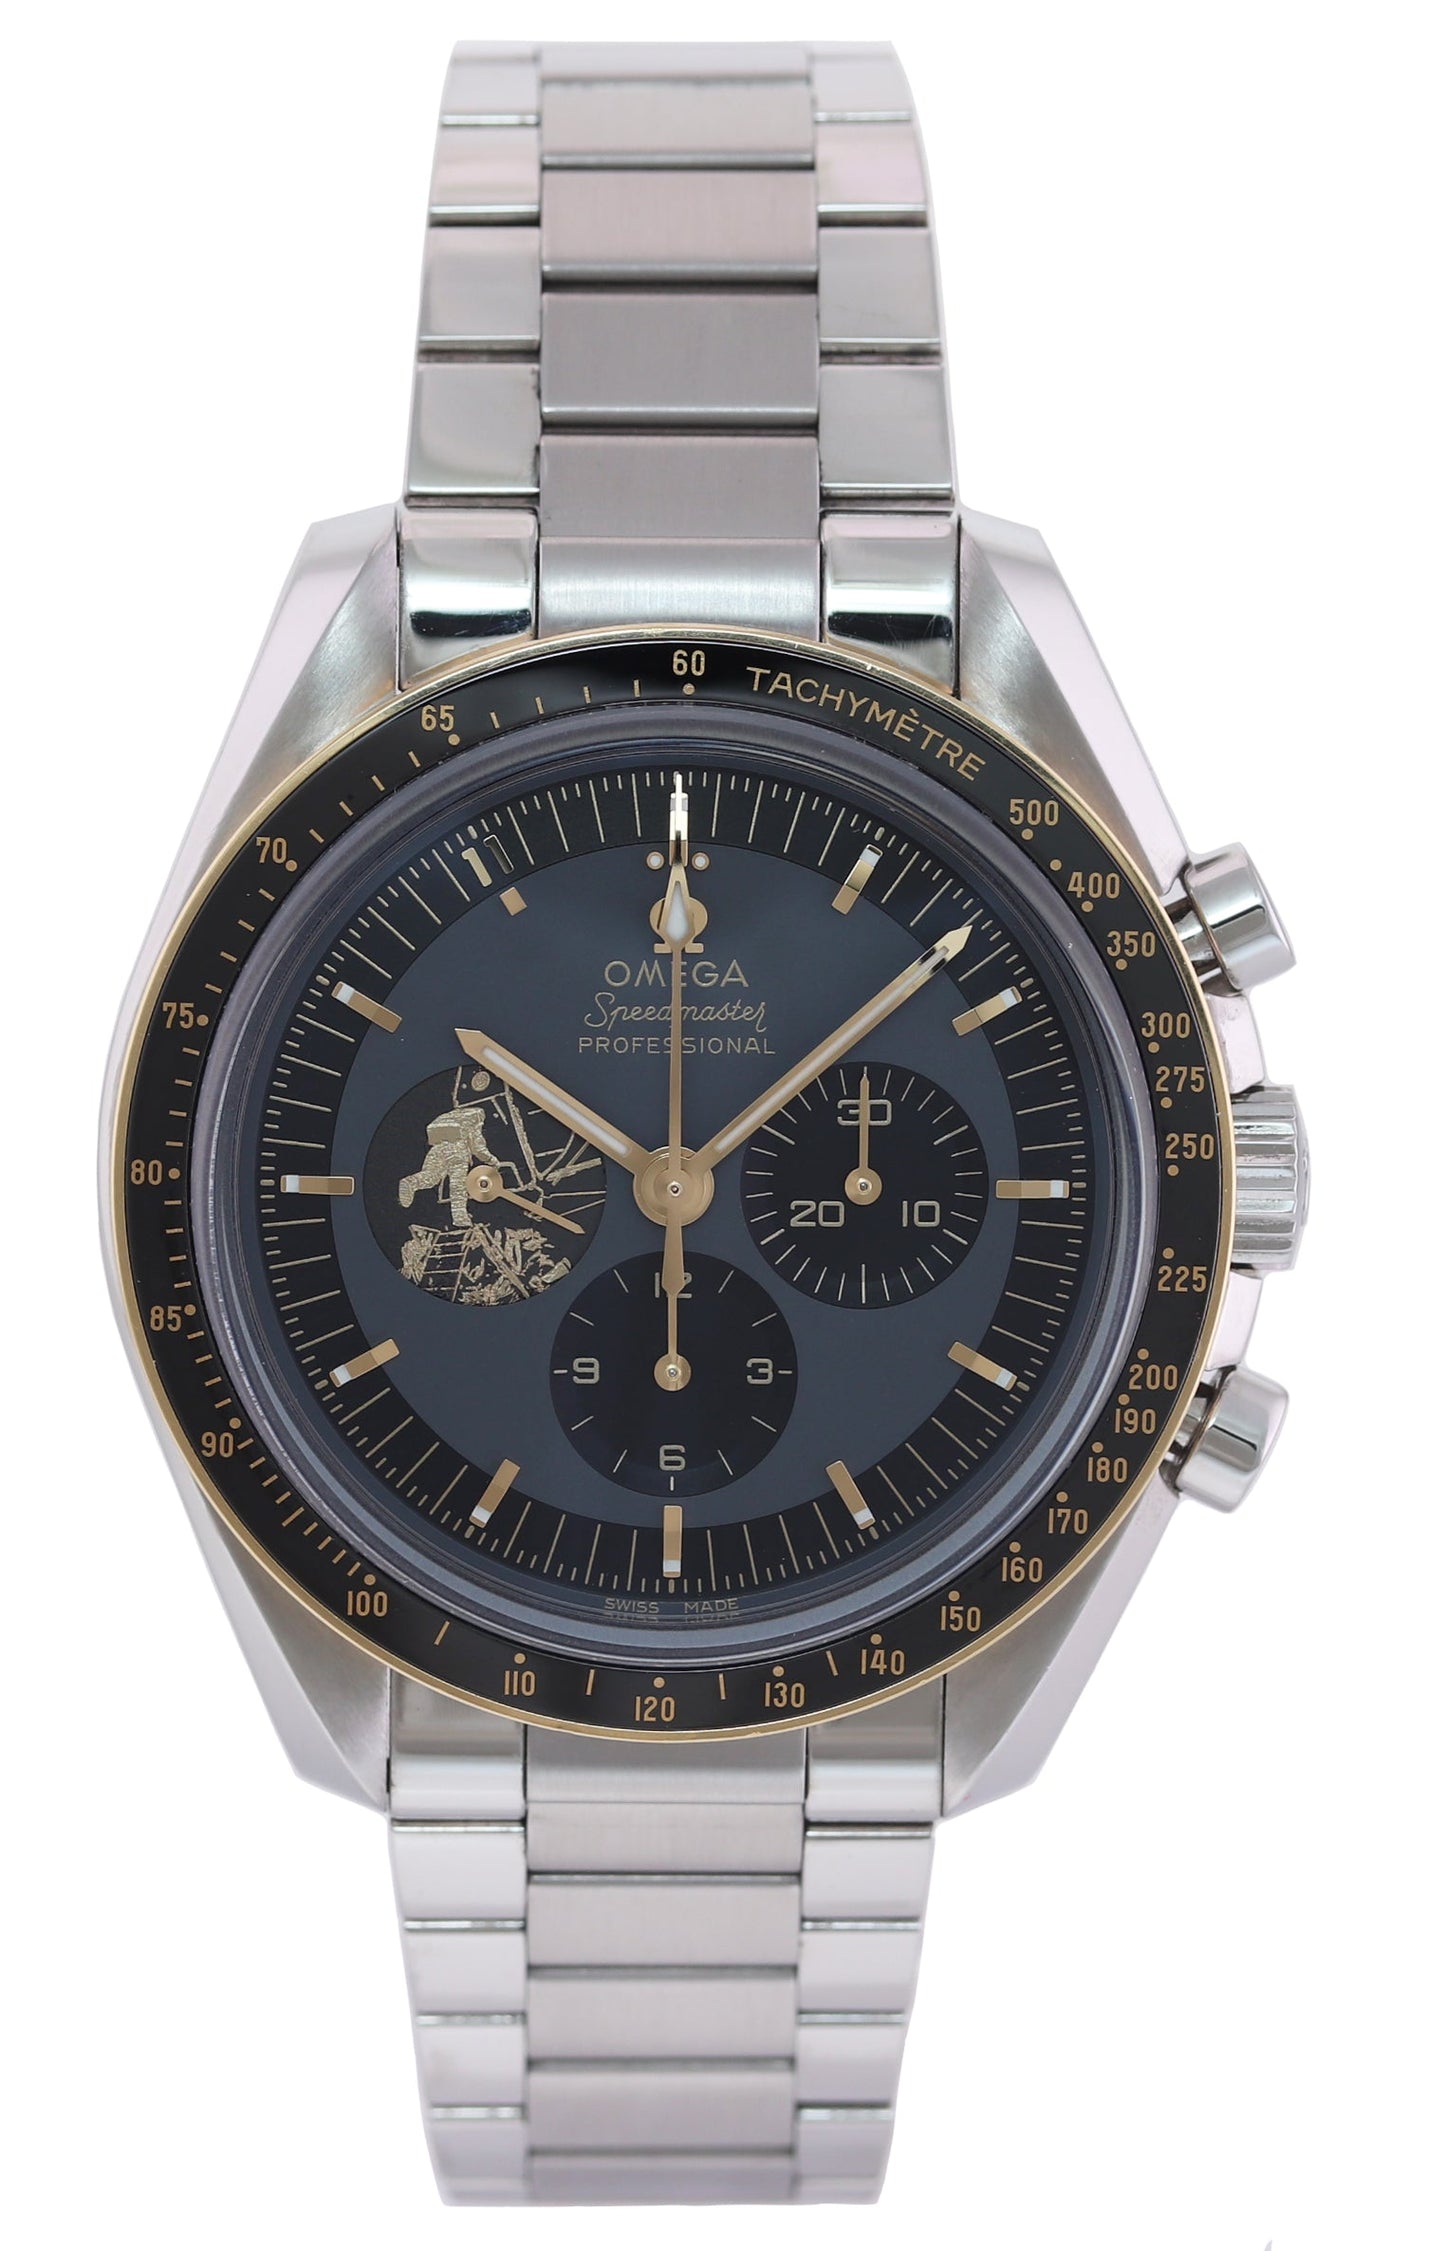 2020 Omega Speedmaster Apollo 11 Anniversary Limited Edition 310.20.42.50.01.001 Watch